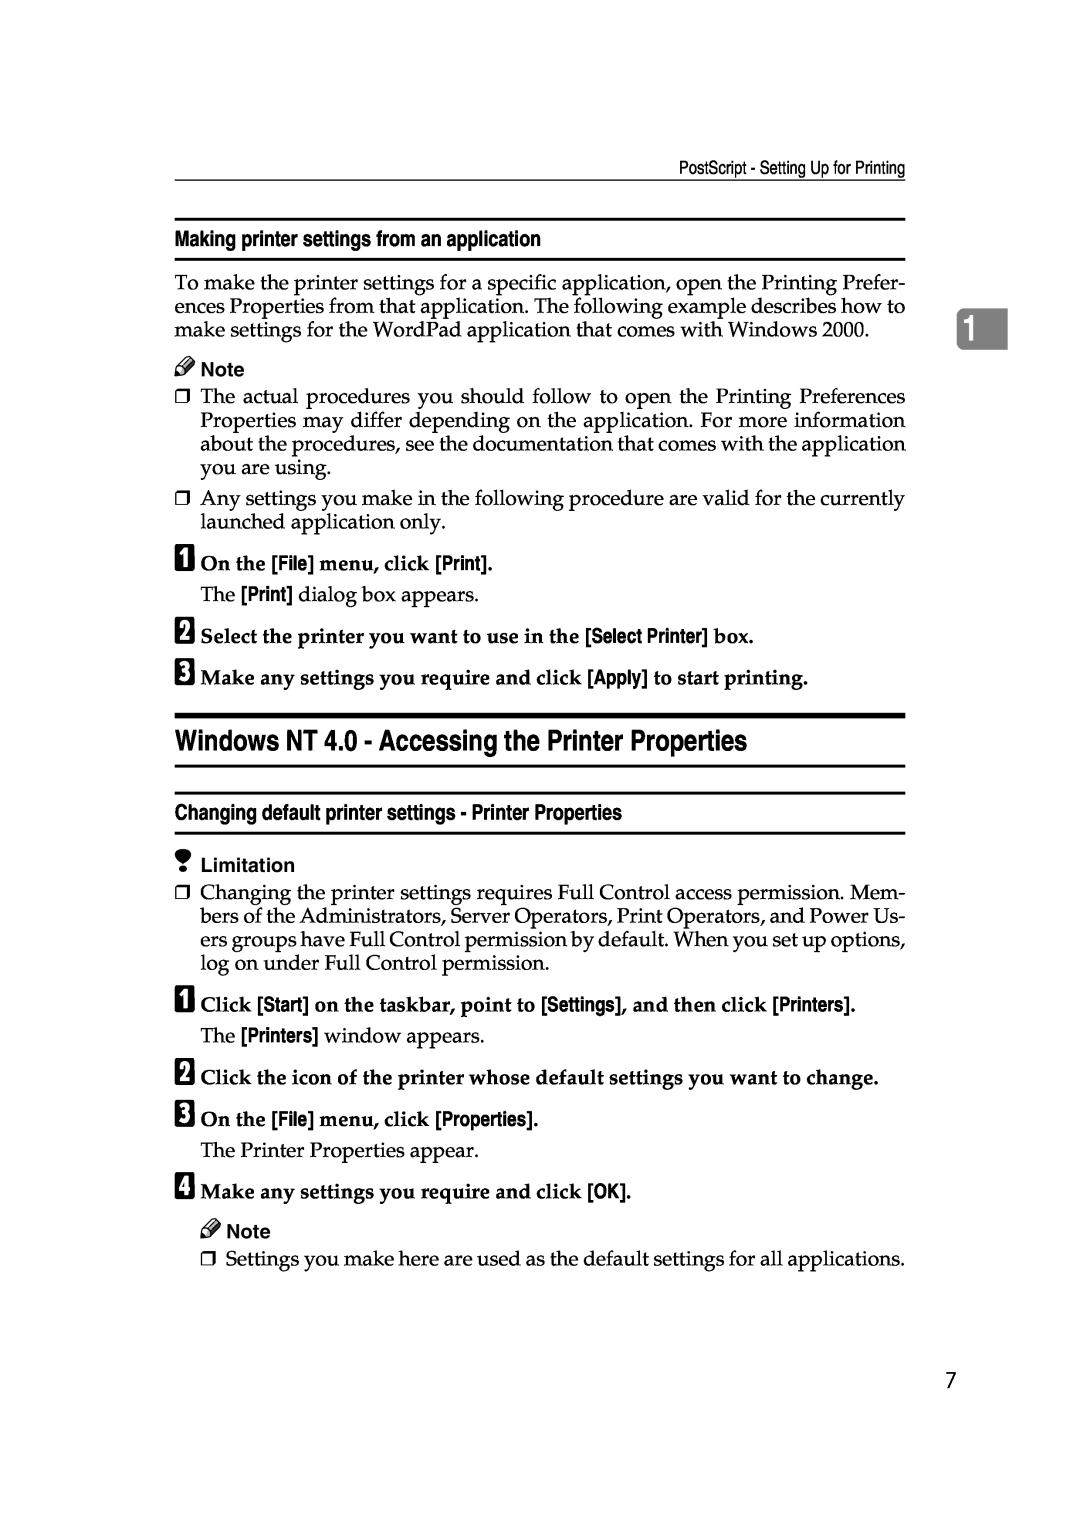 Lanier AP3200 manual Windows NT 4.0 - Accessing the Printer Properties, Making printer settings from an application 